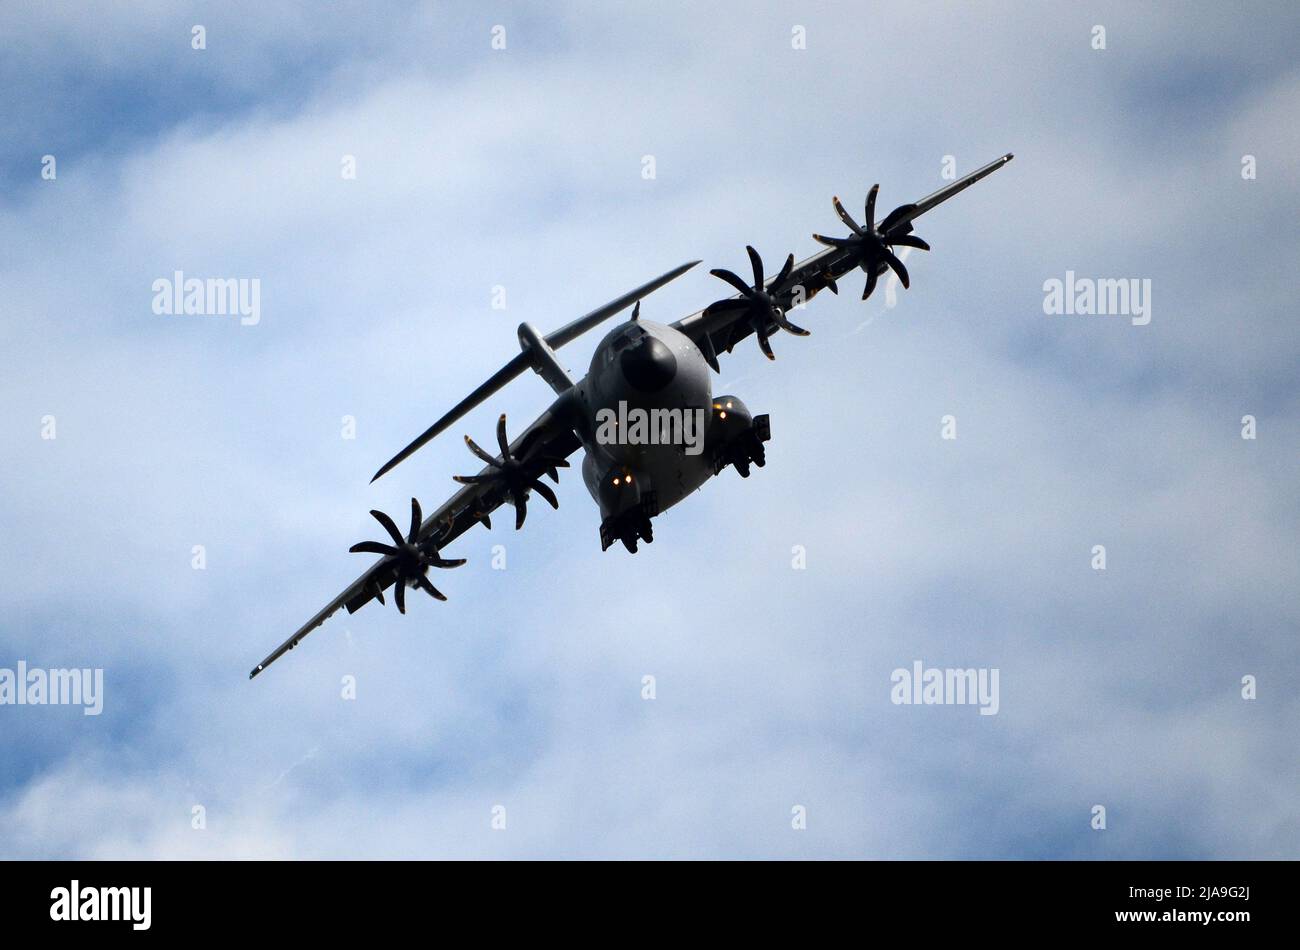 Airbus A400M Atlas Military Transport Aircraft Landing Stockfoto